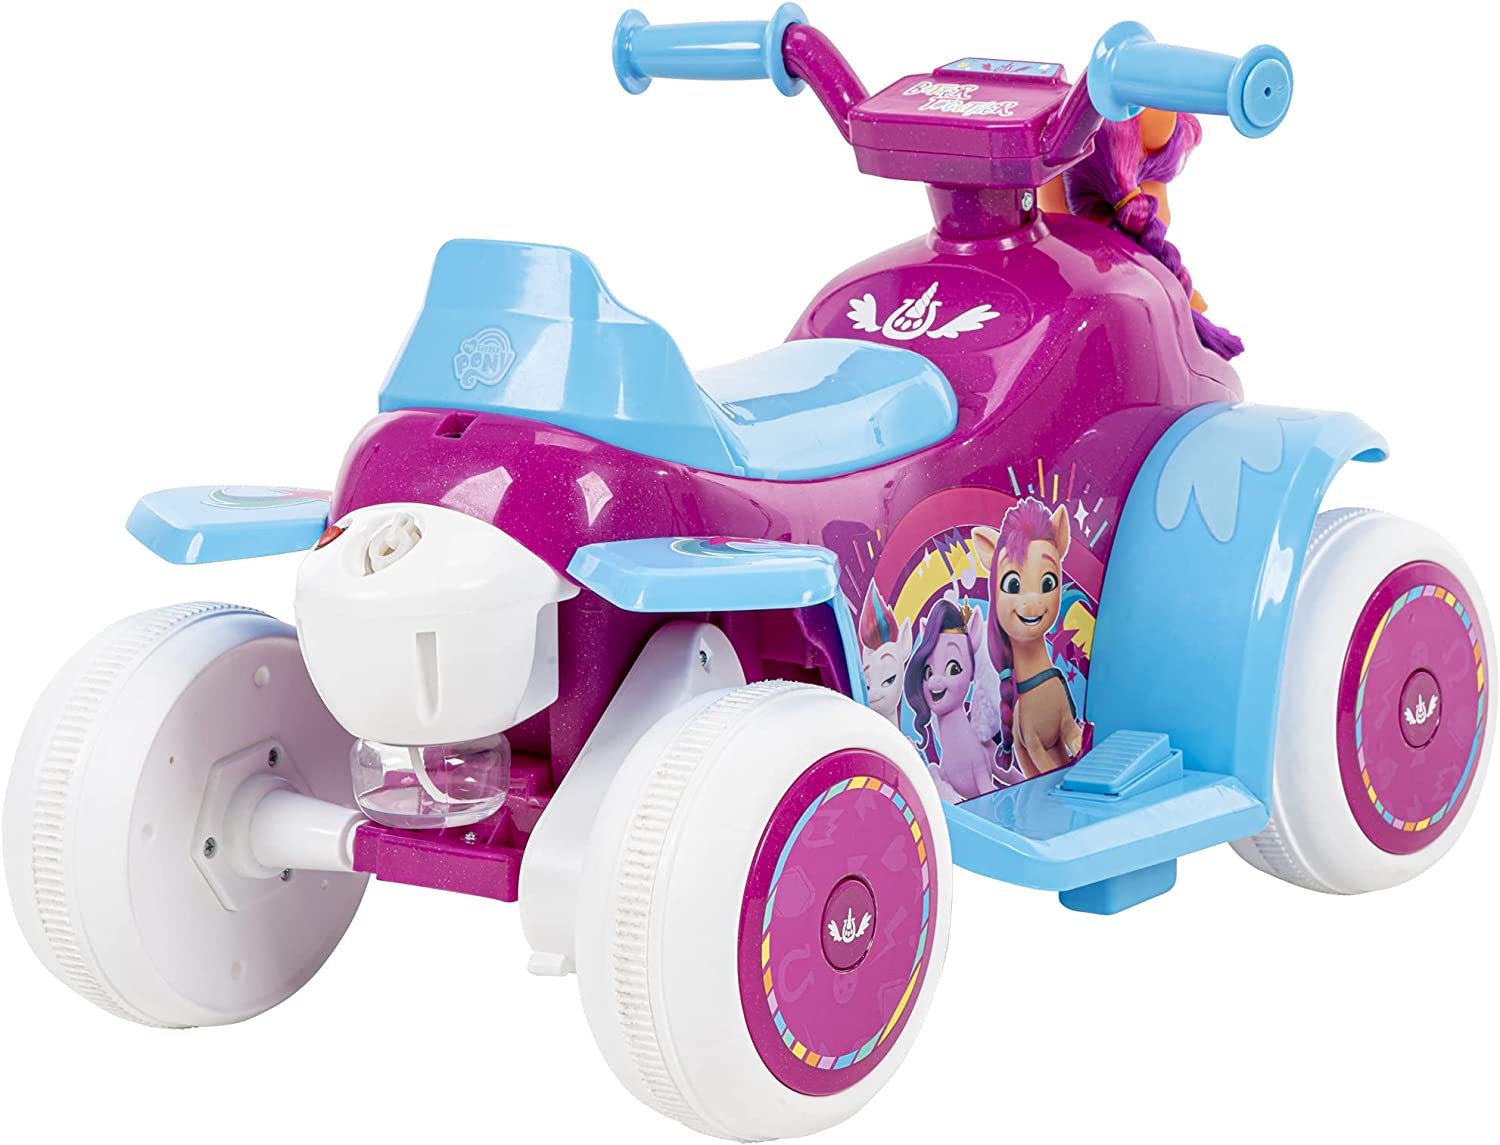 MLP: ANG 6V Ride On Bubble Mini Quad Toy 3